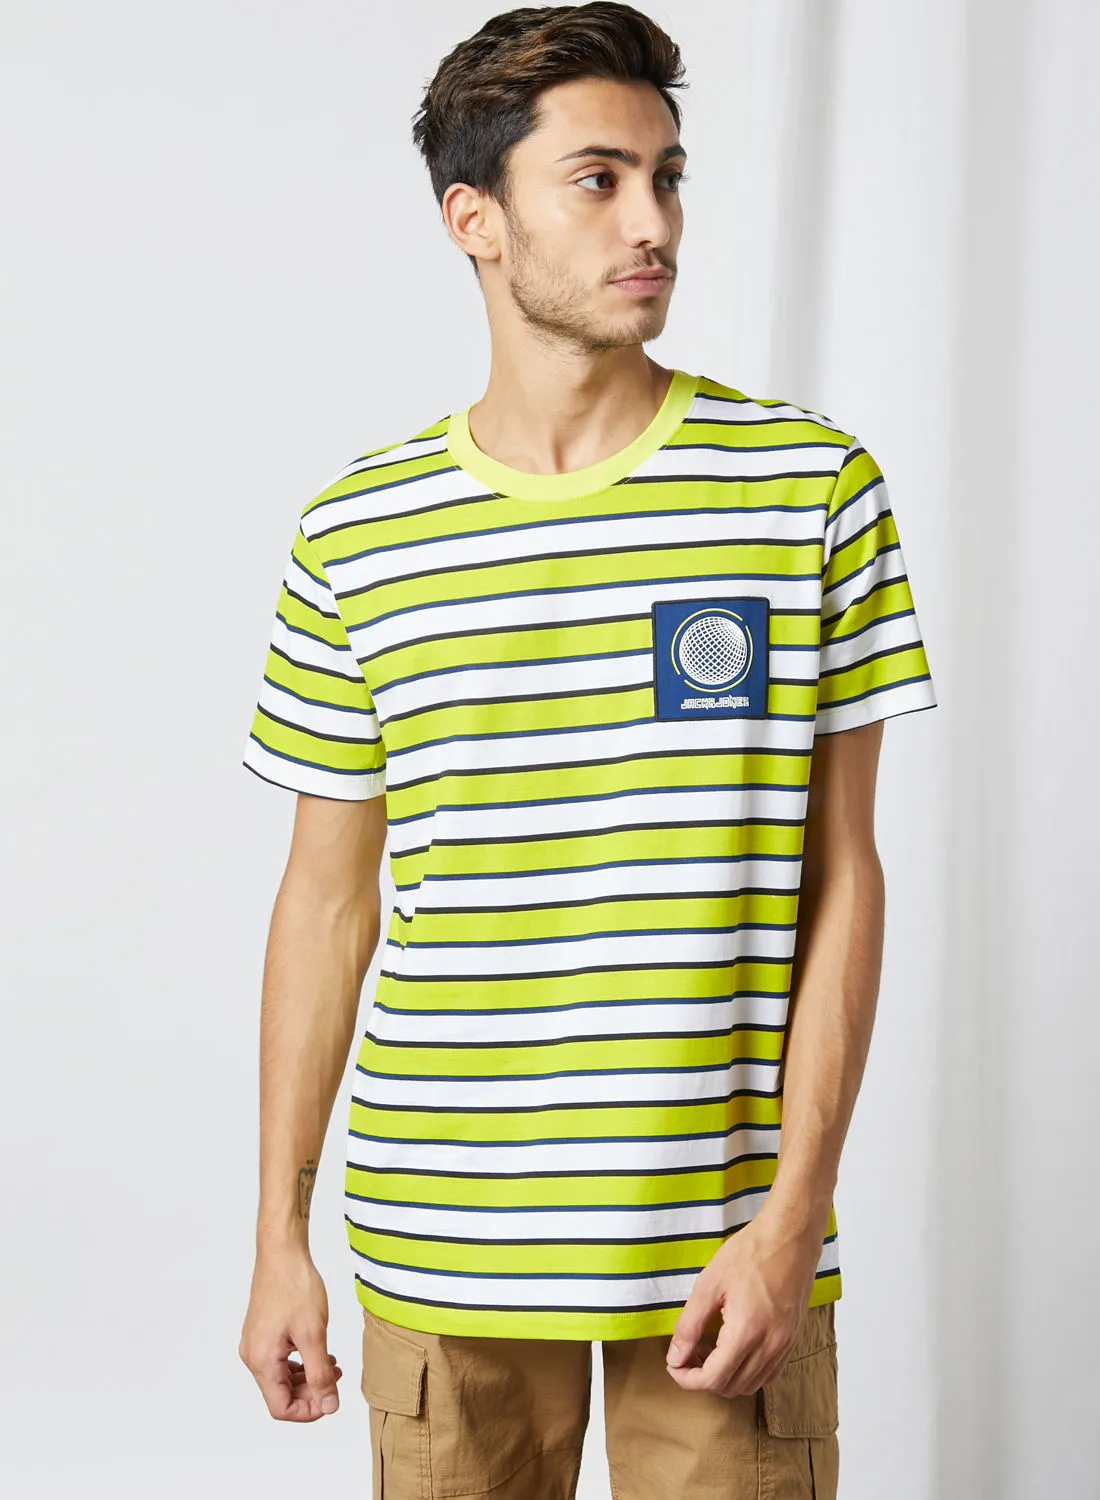 JACK & JONES Striped Design Short Sleeves T-shirt Yellow/Black/White